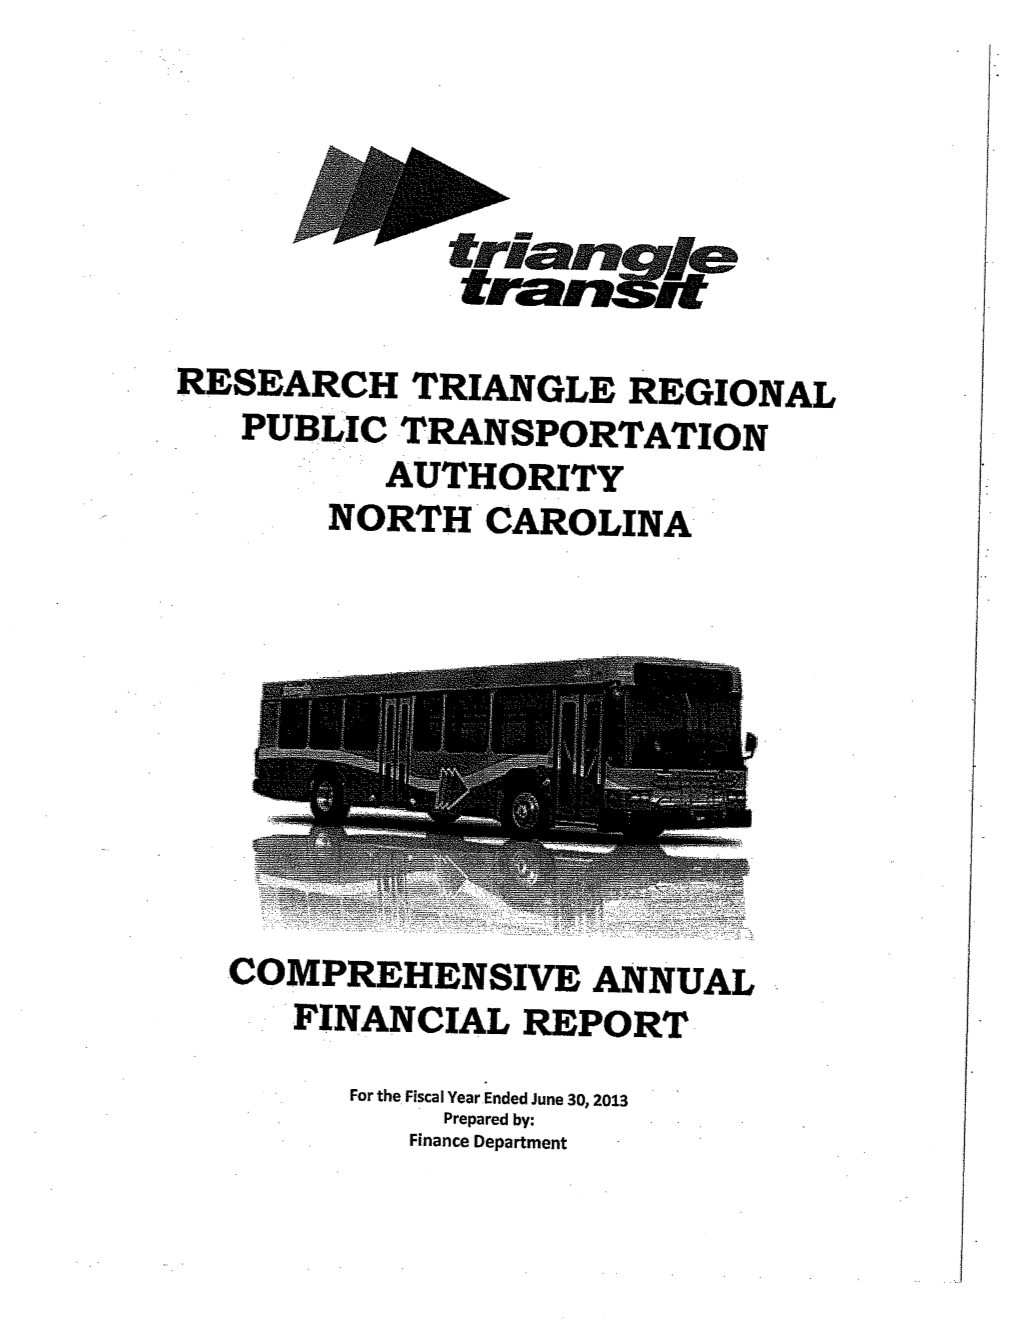 Research Triangle Regional Public Transportation Authority North Carolina